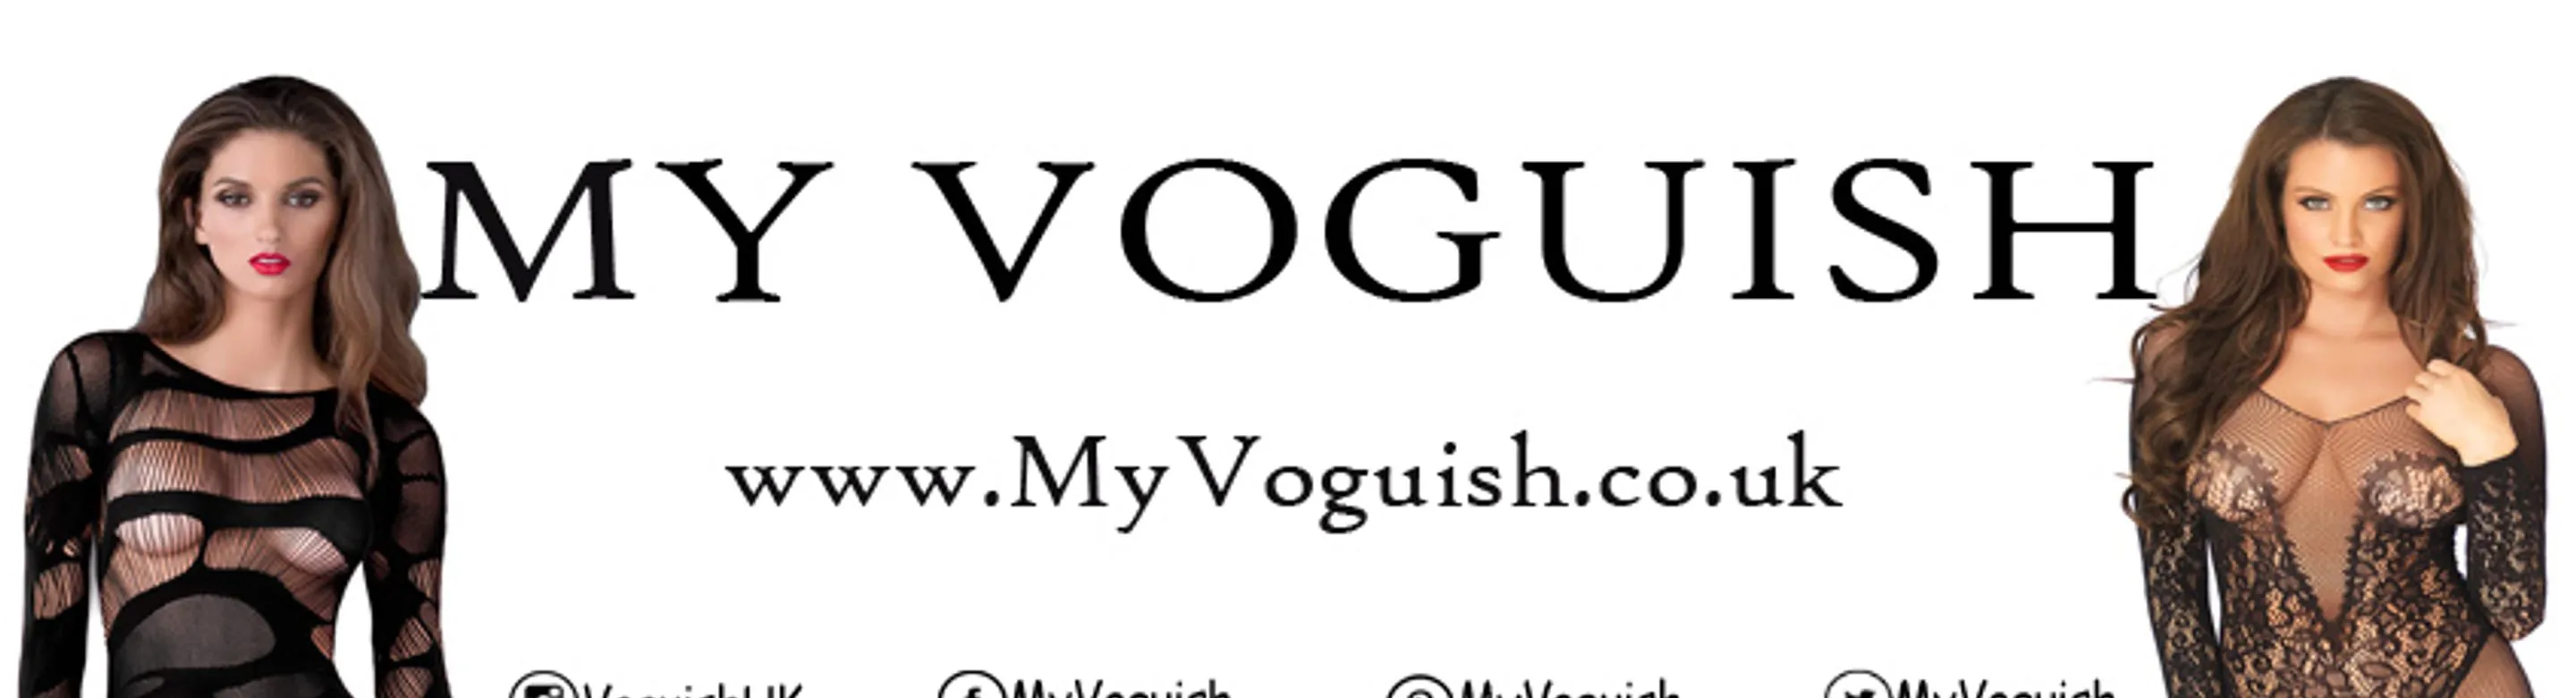 My Voguish